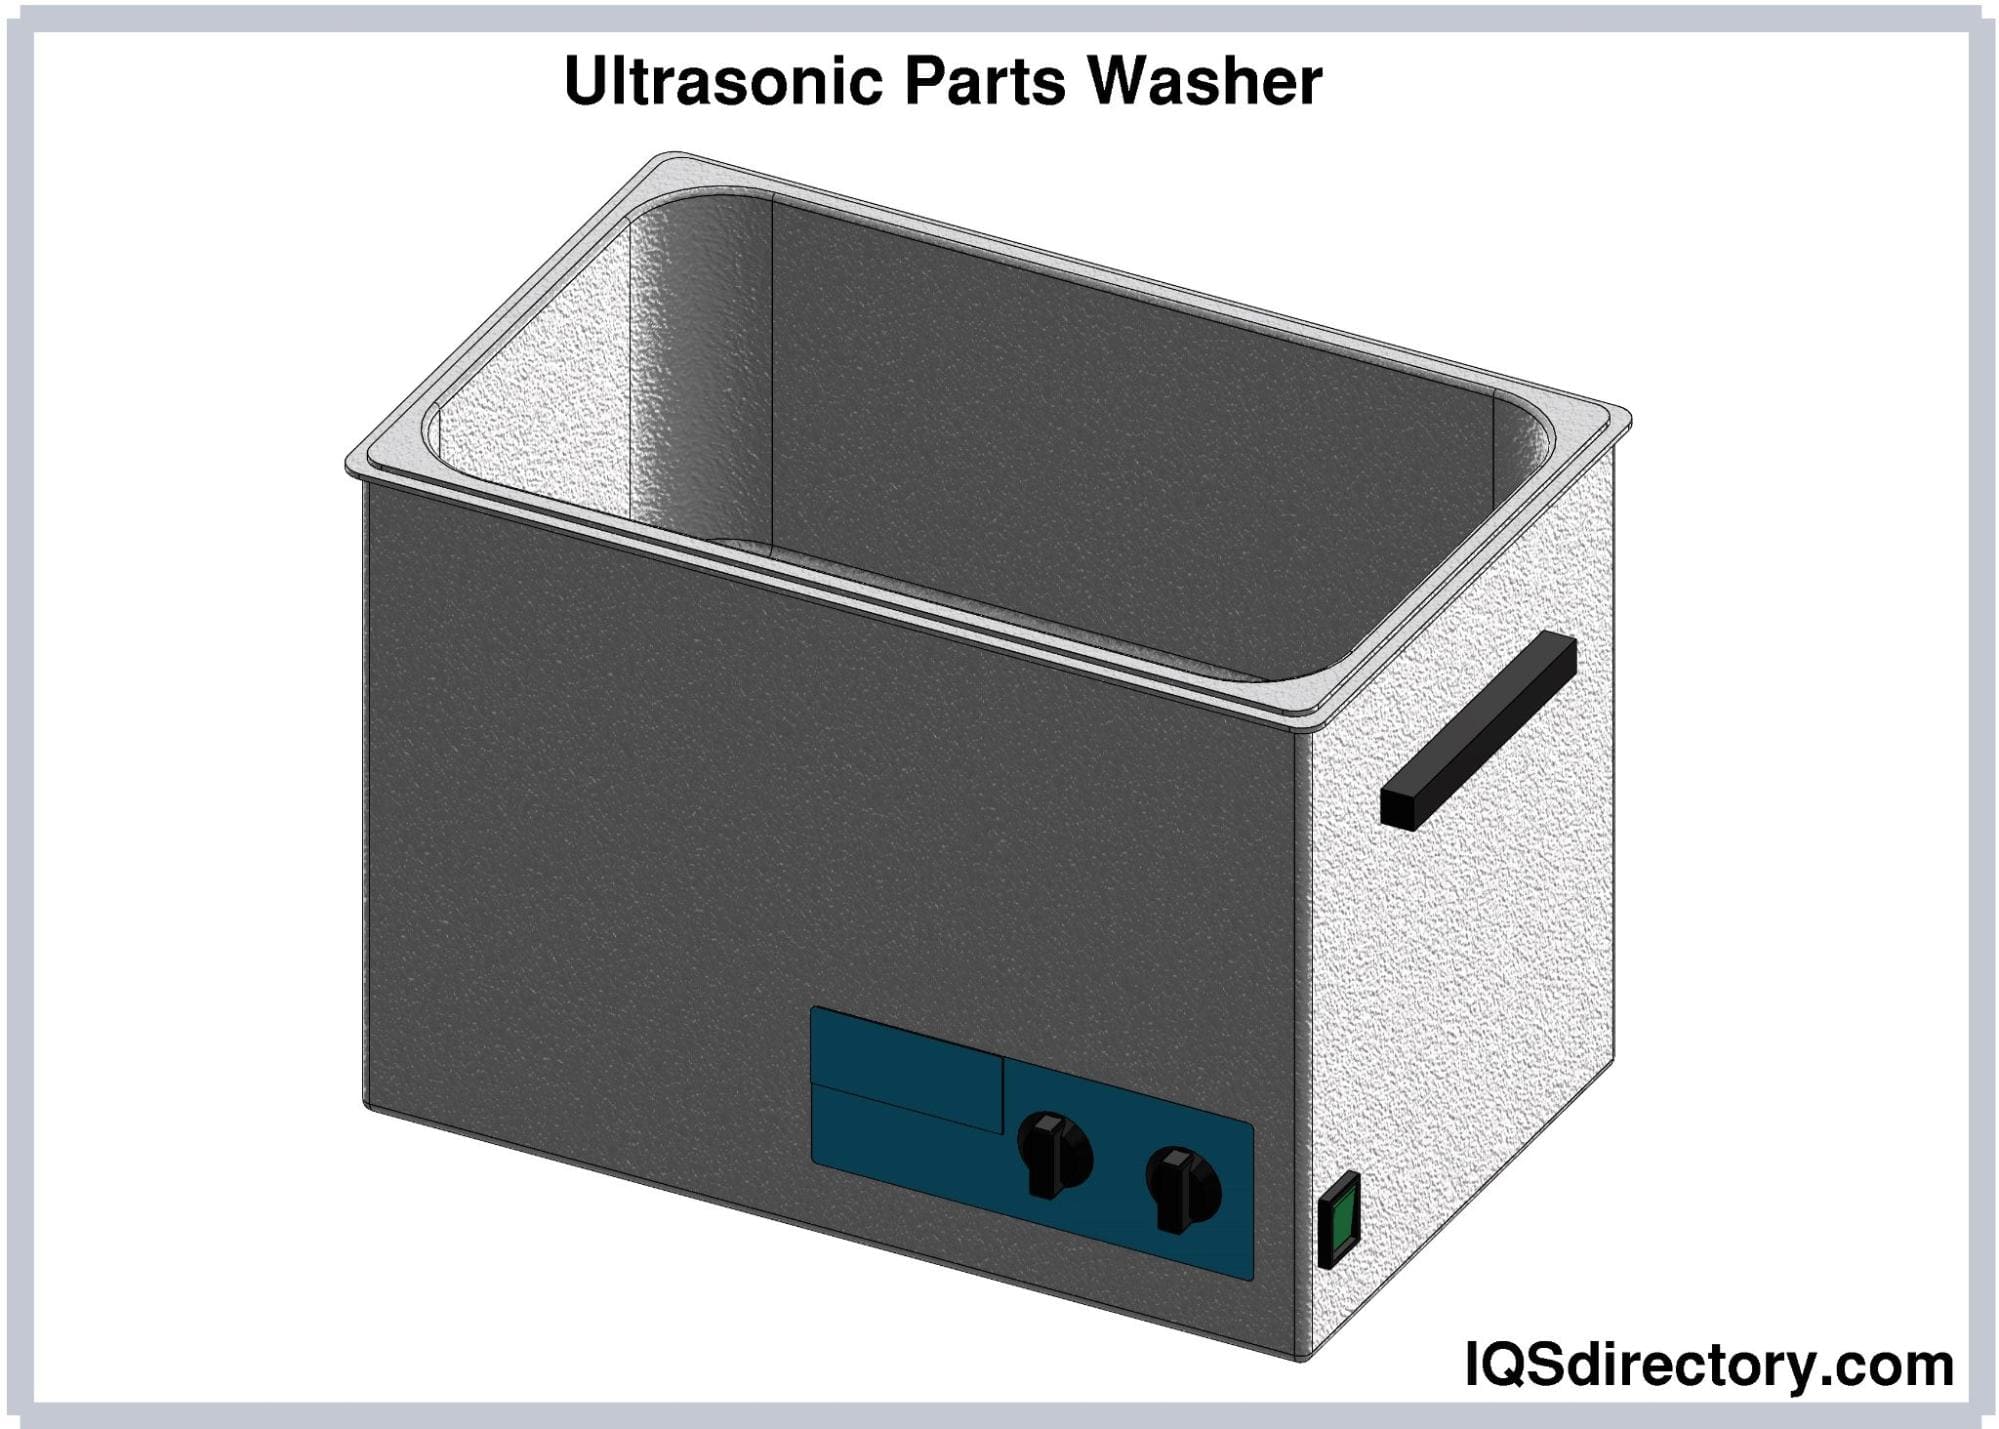 Ultrasonic Parts Washer